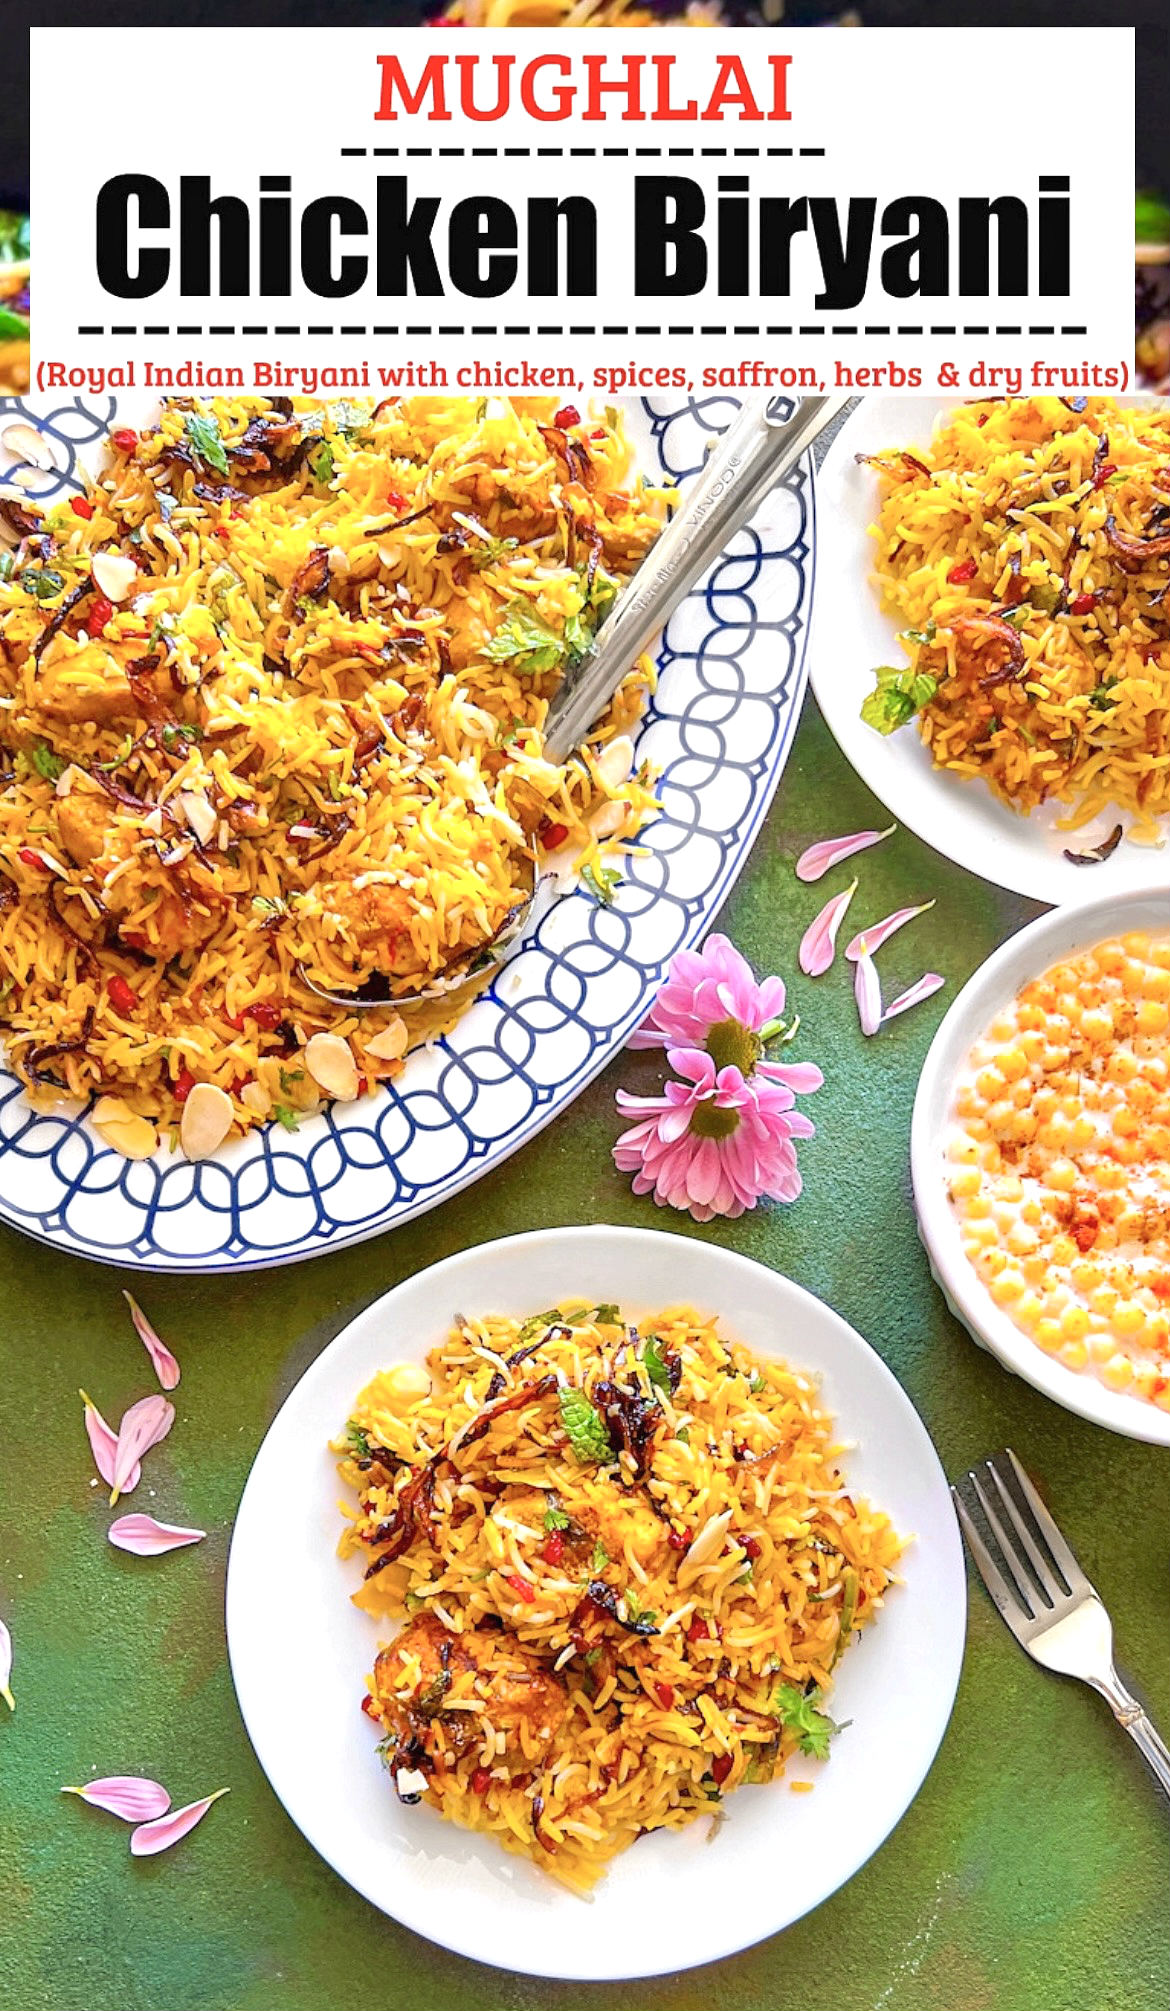 Mughlai Chicken Biryani Recipe